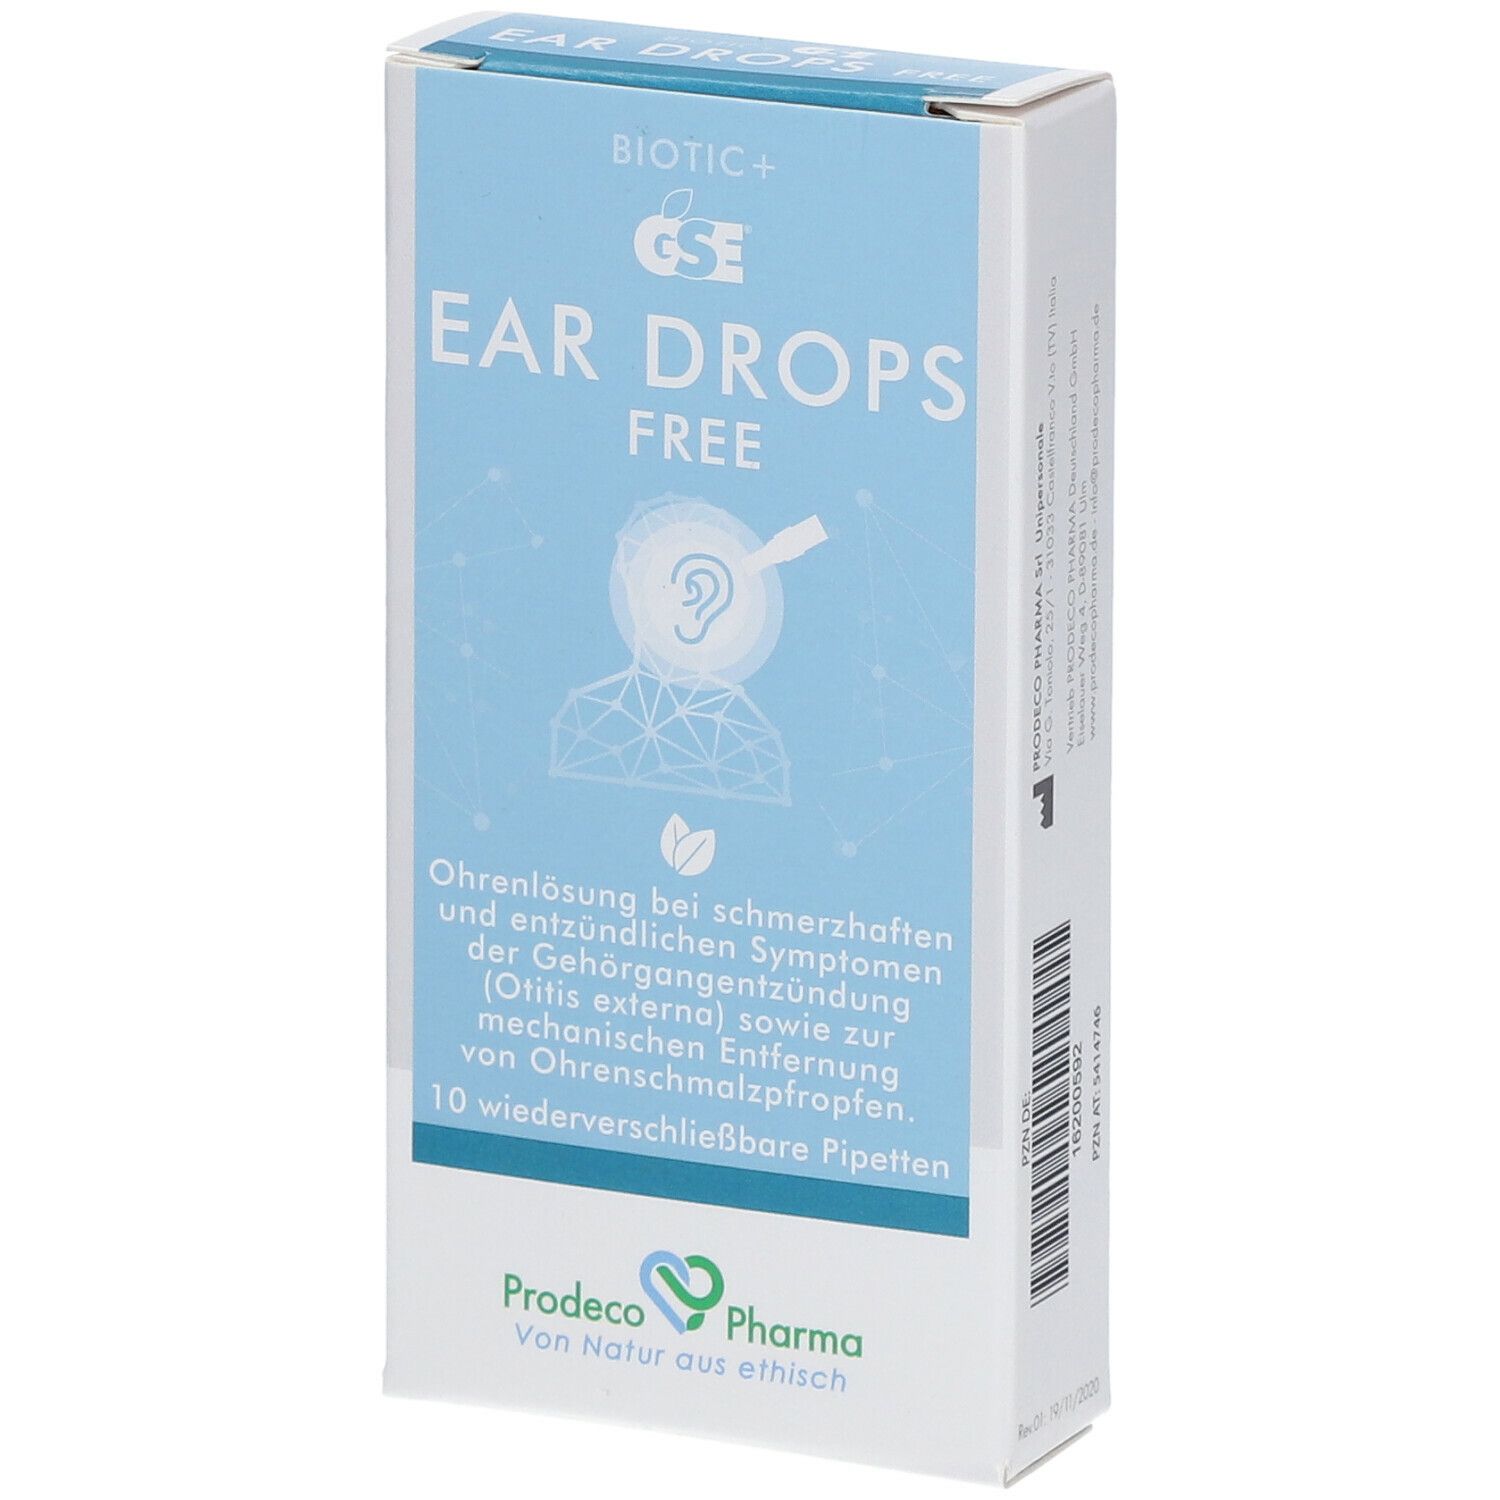 GSE EAR Drops